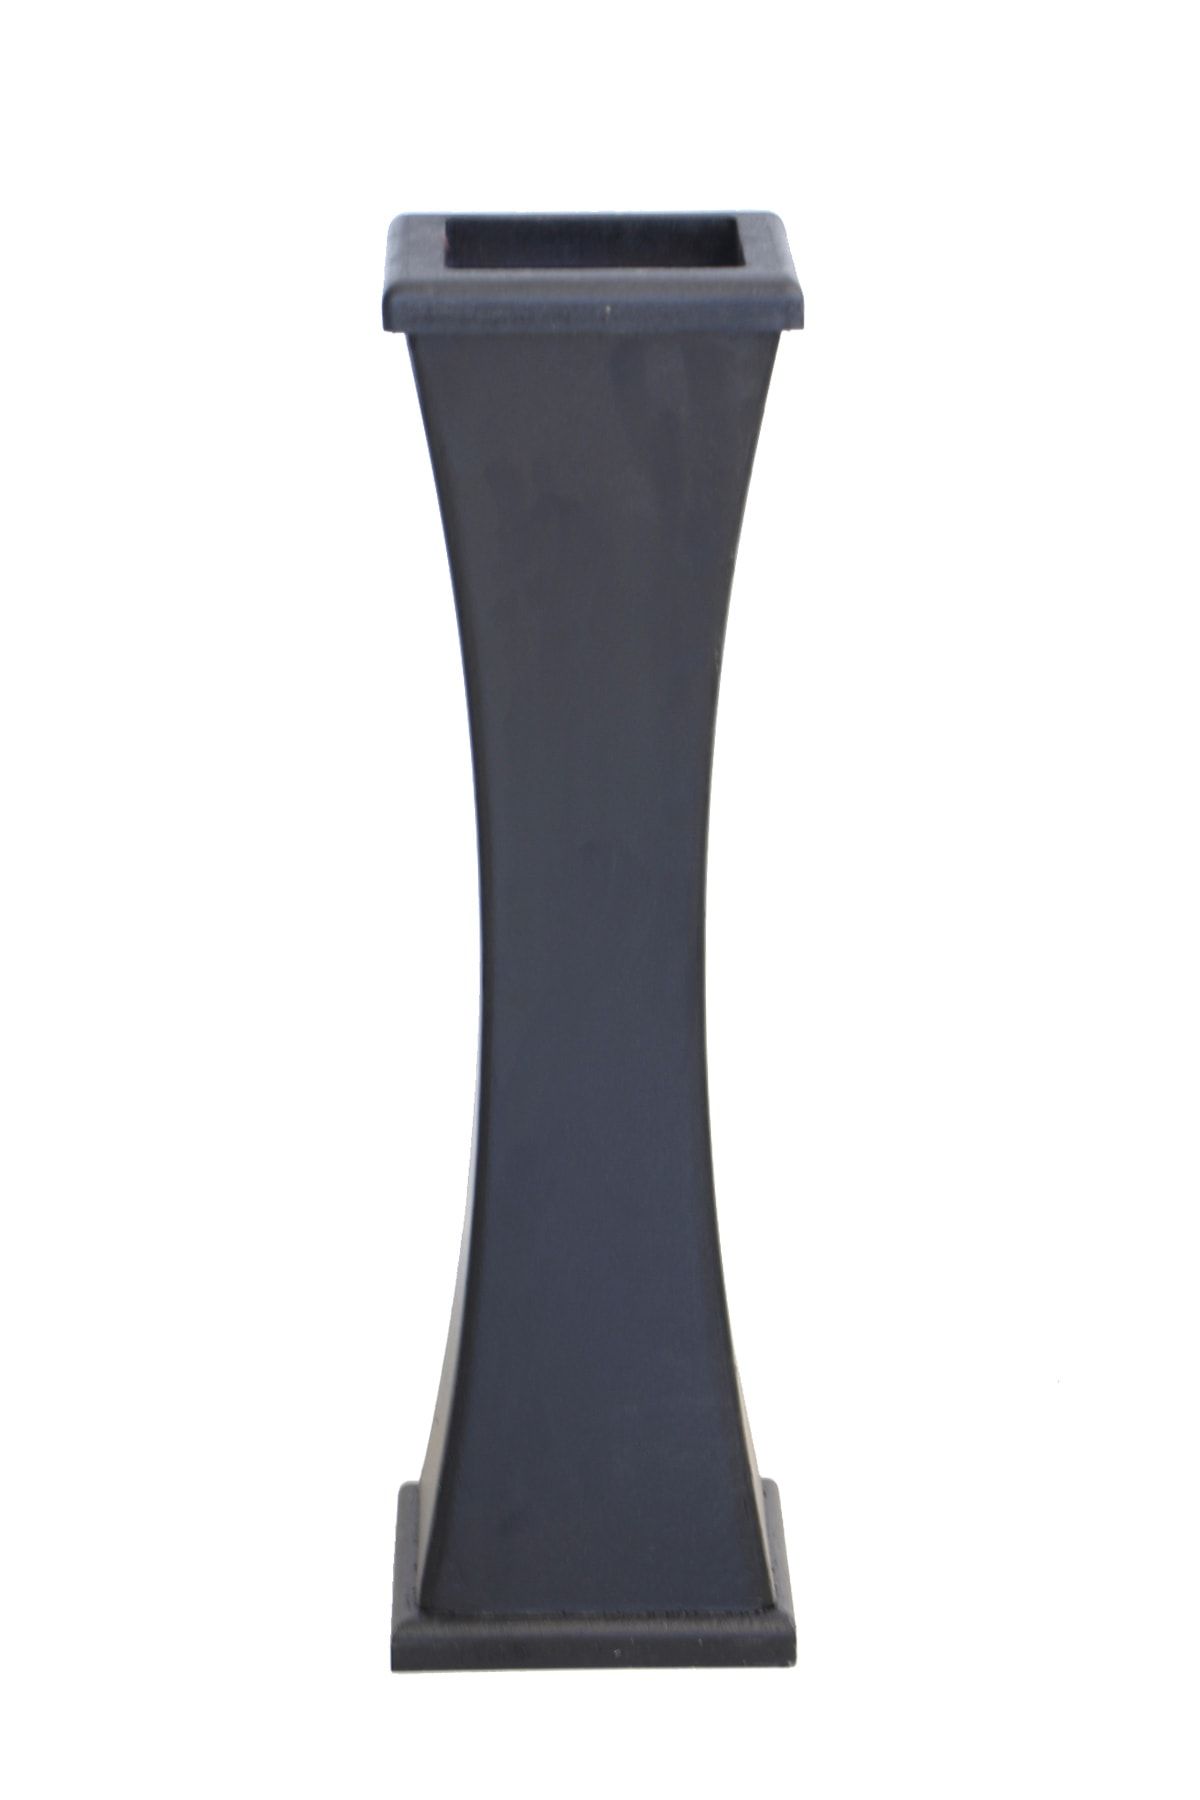 Yapay Çiçek Deposu Siyah İnce Belli Model Ahşap Vazo 50 cm